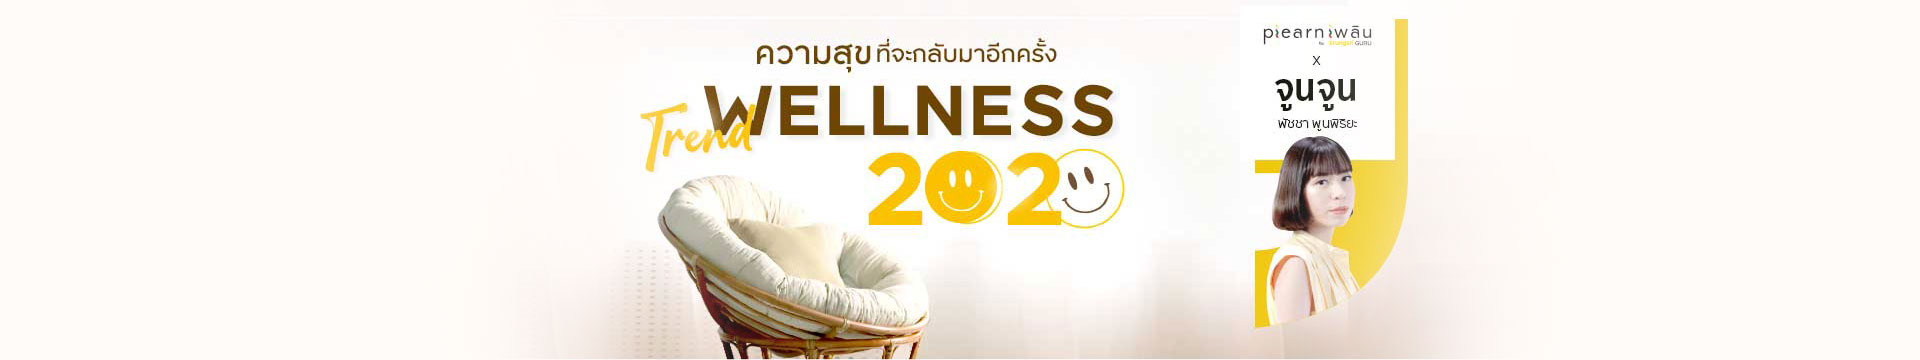 Wellness 2020 เทรนด์ความสุขสมบูรณ์ที่จะกลับมาอีกครั้ง